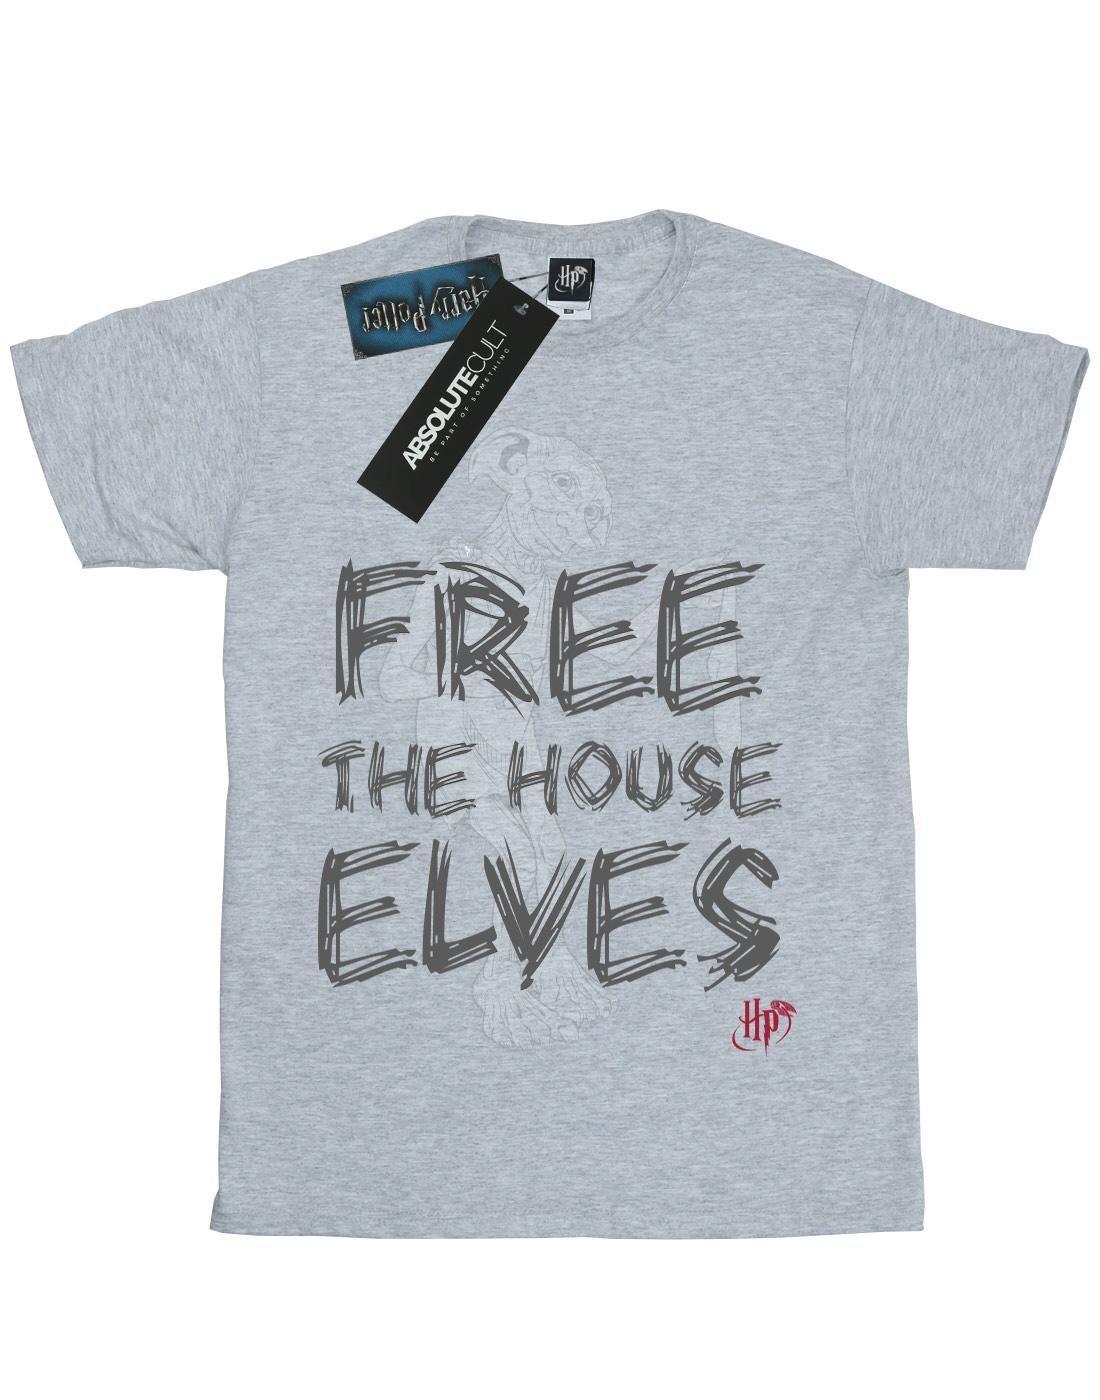 Dobby Free The House Elves Tshirt Herren Grau XL von Harry Potter